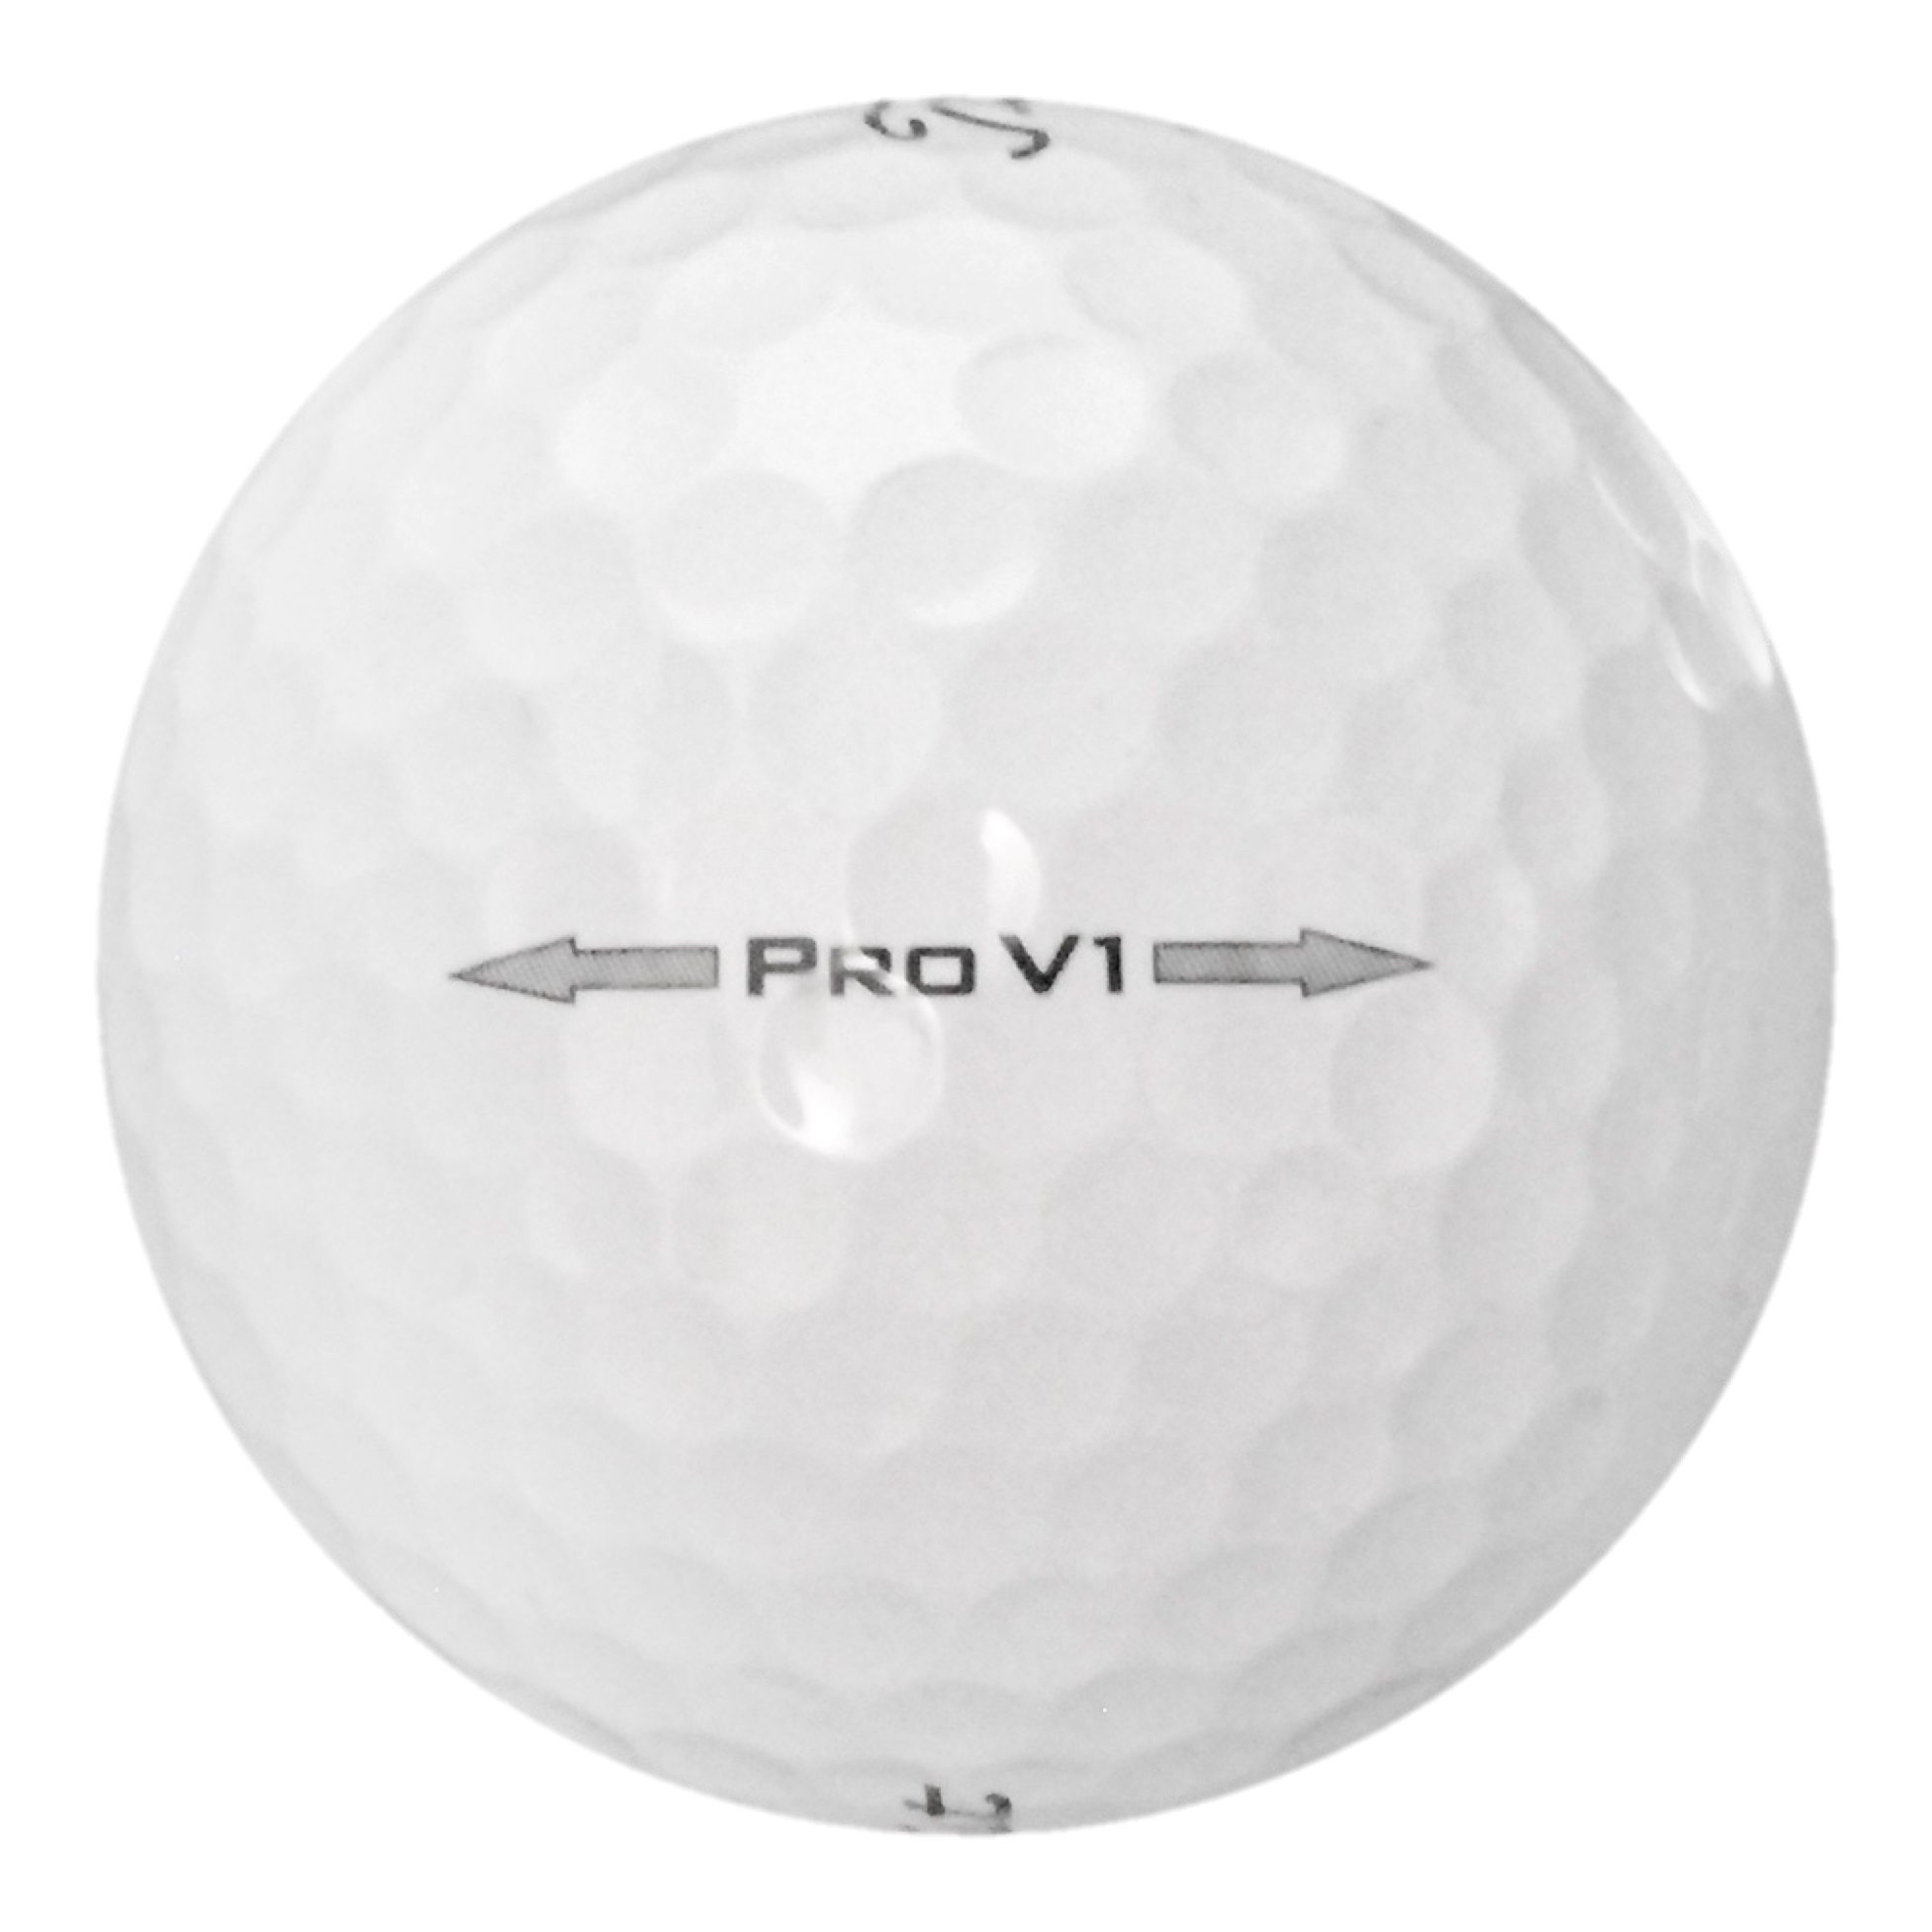 Titleist 2014 Pro V1 Golf Balls, Prior Generation, Used, Good Quality, 48 Pack - image 2 of 3